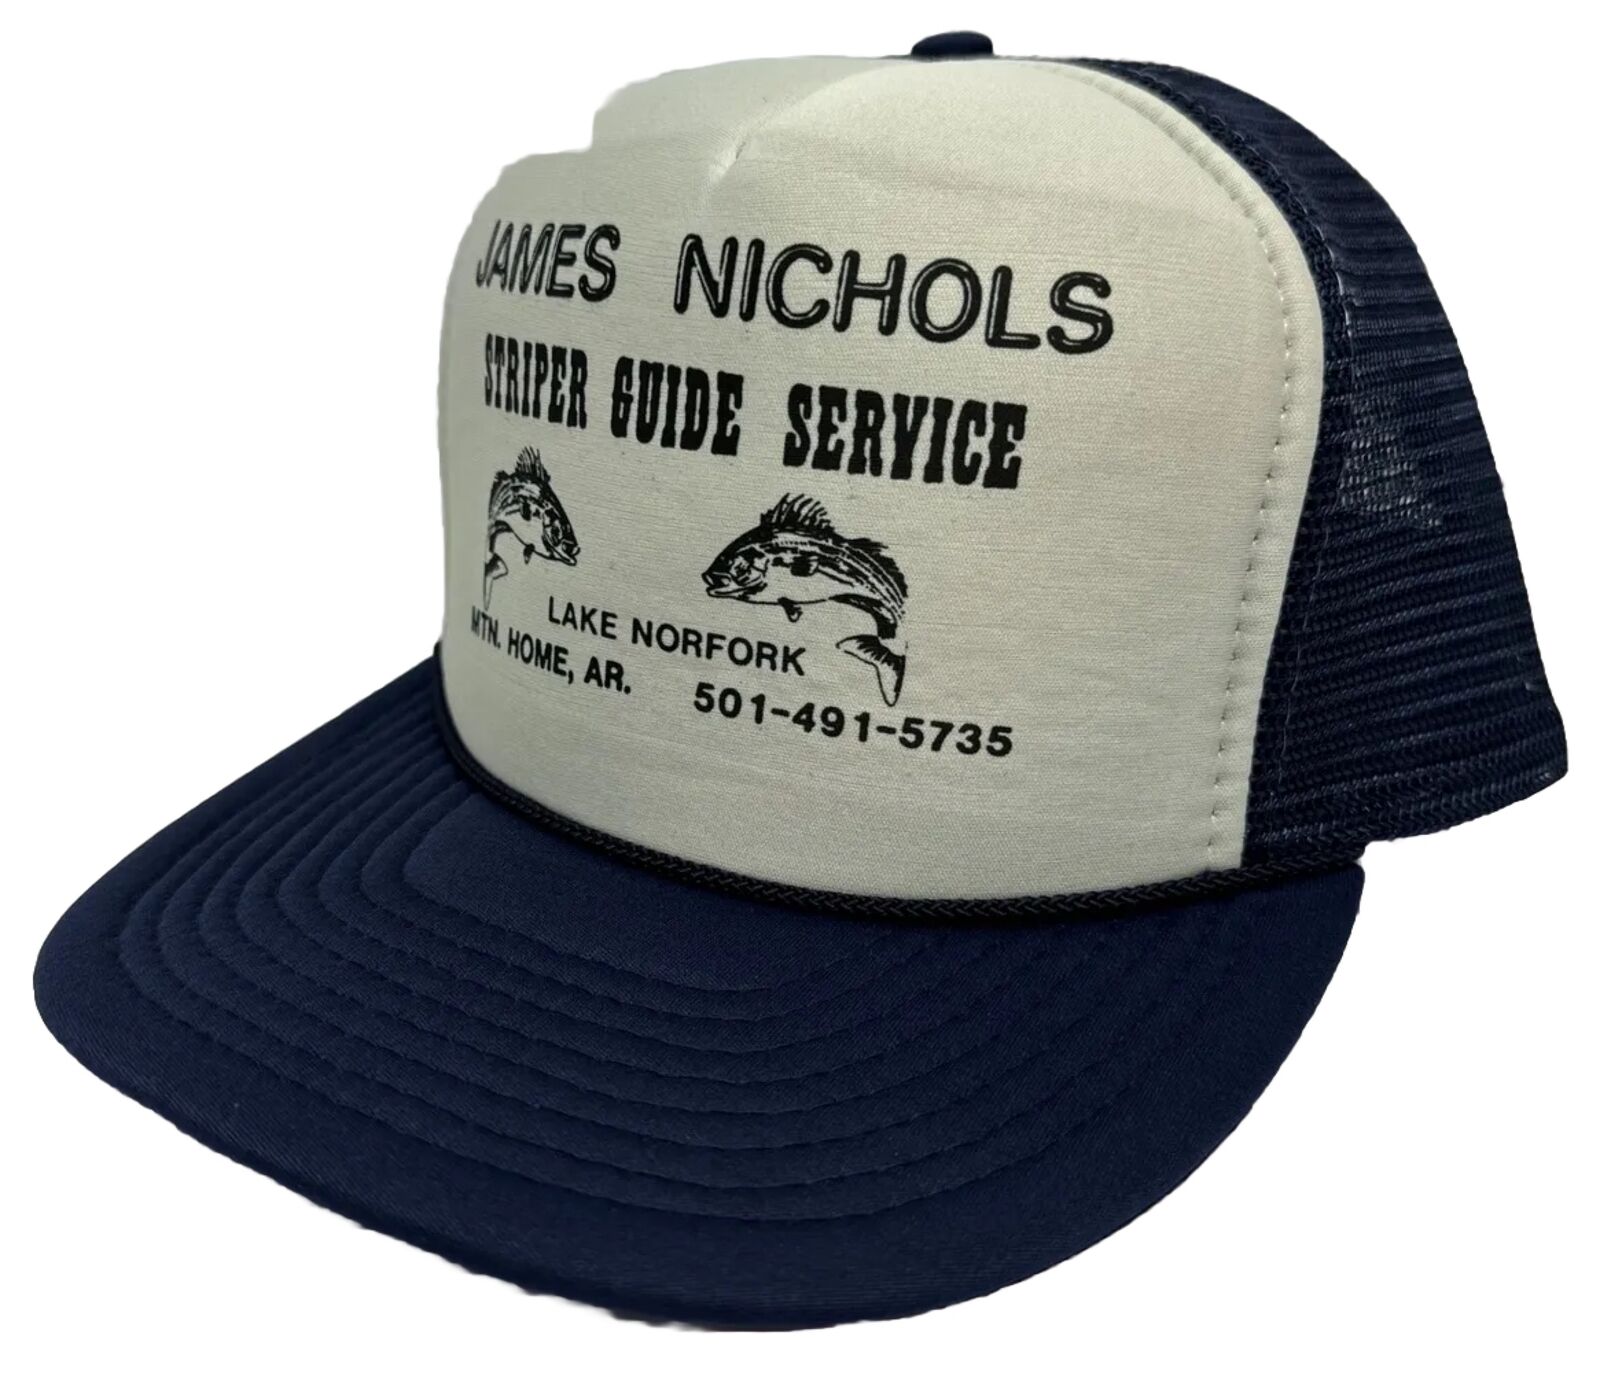 Vintage James Nichols Striper Guide Hat Cap Snap Back Blue Mesh Trucker Fishing